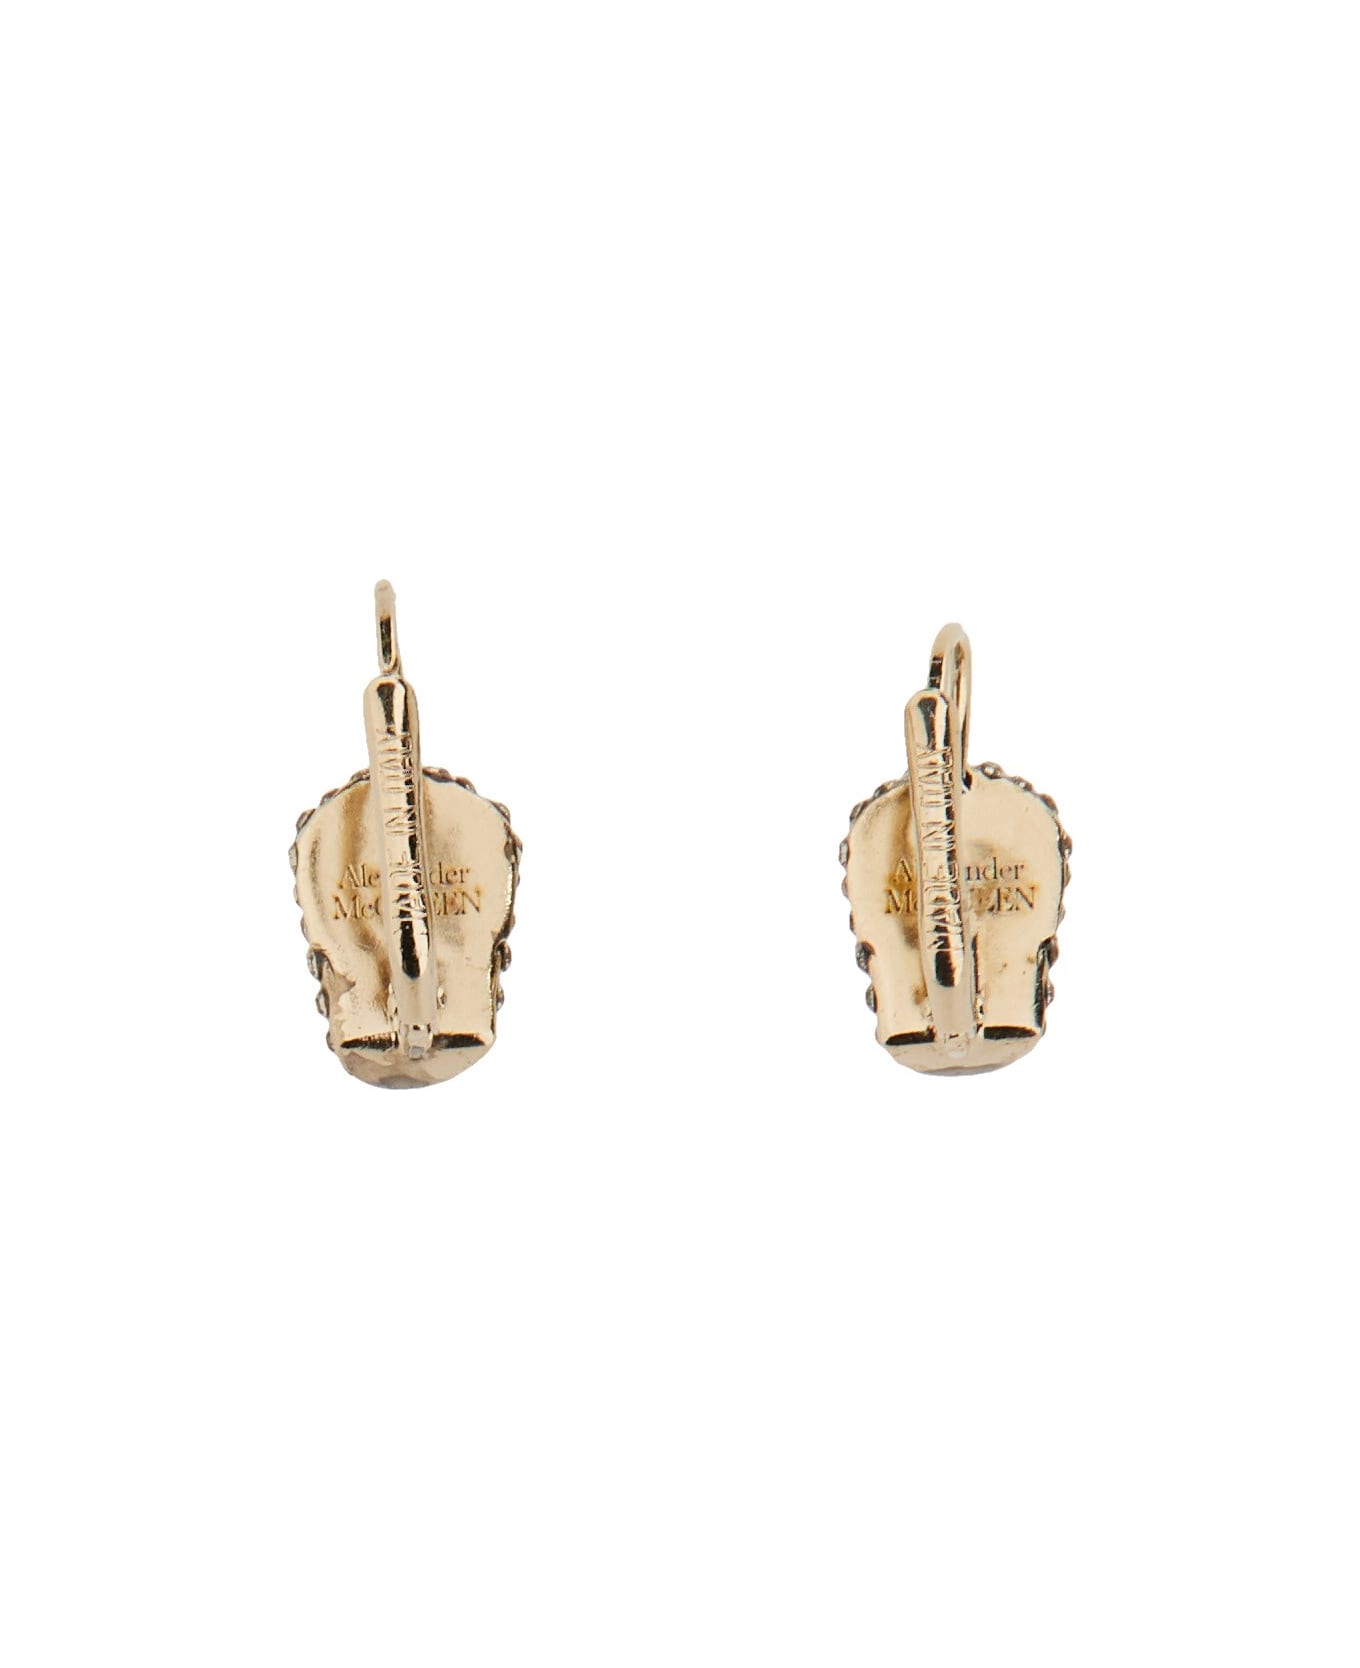 Alexander McQueen Skull Earrings - Oro